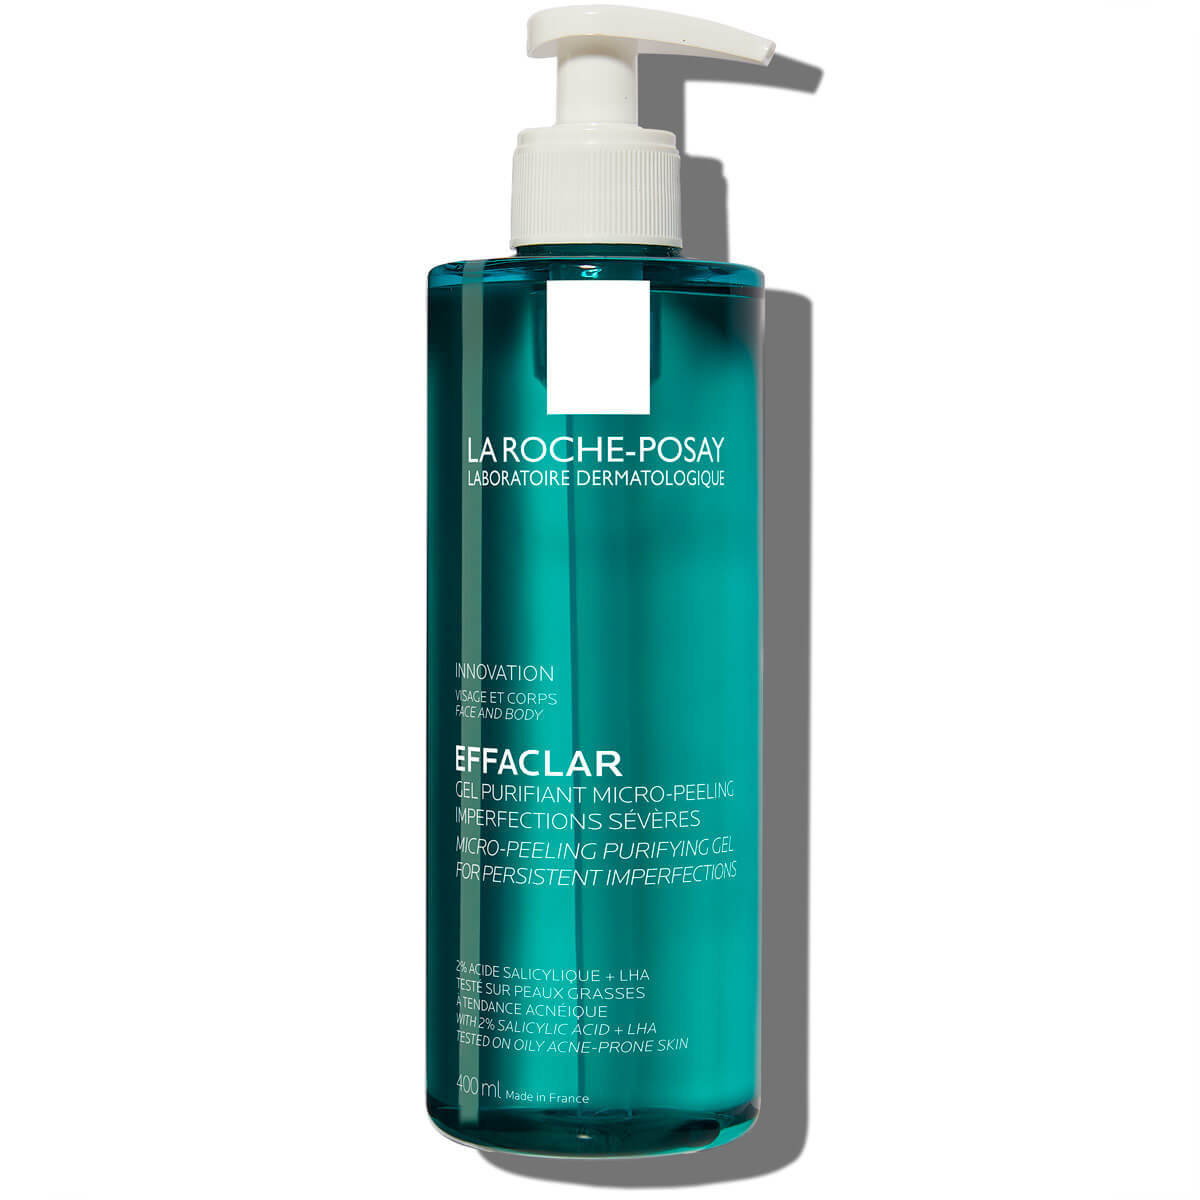 La Roche-Posay Effaclar Micro-Peeling Purifying Gel 400 ml